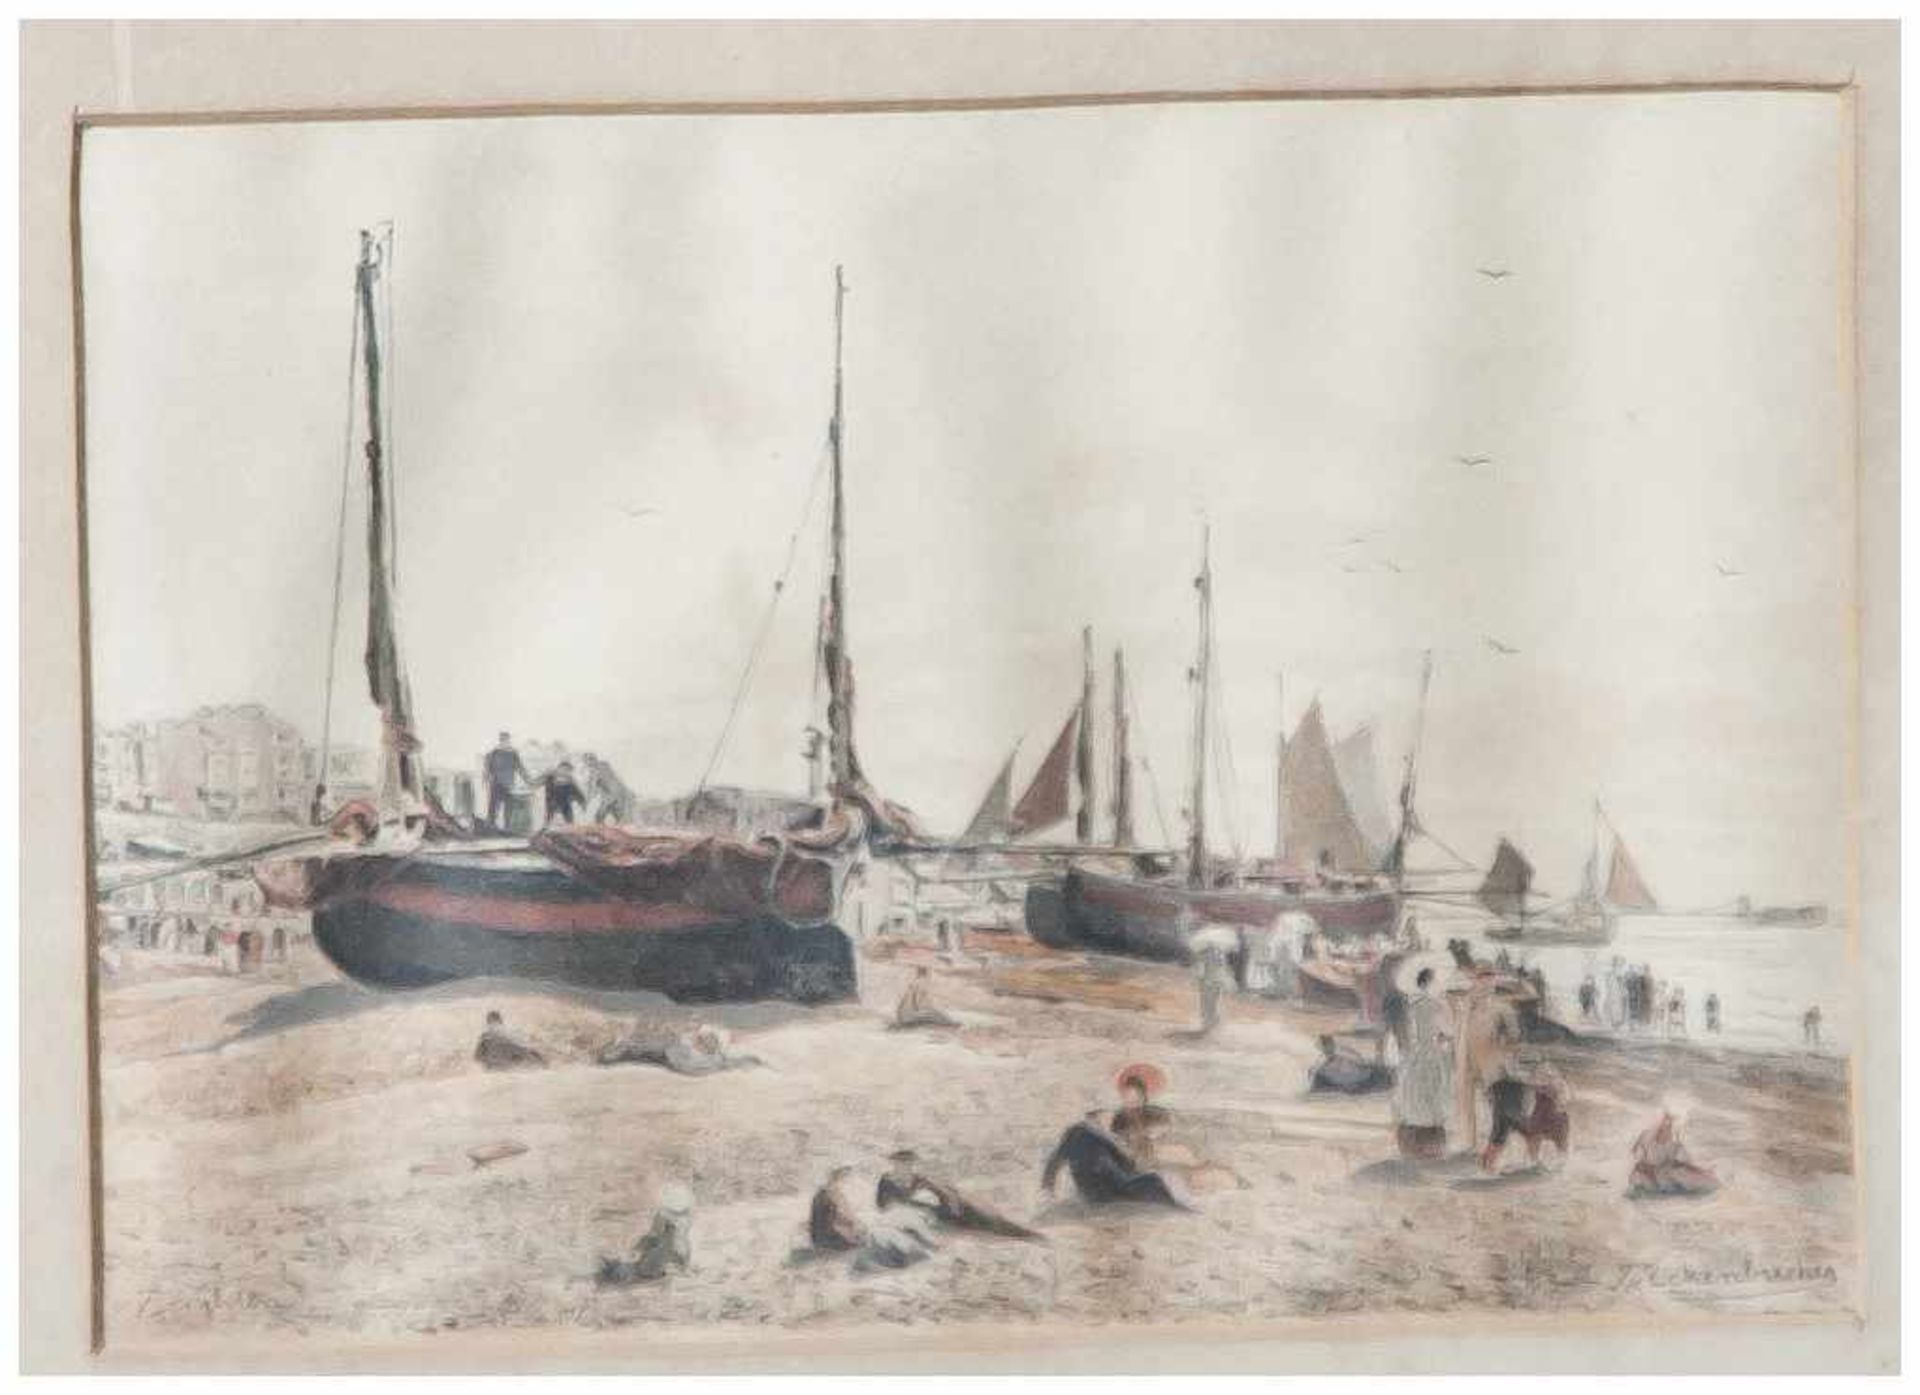 Eckenbrecher, Themistokles v. (1842-1921), "Hafenszene in Brighton", aquarellierte